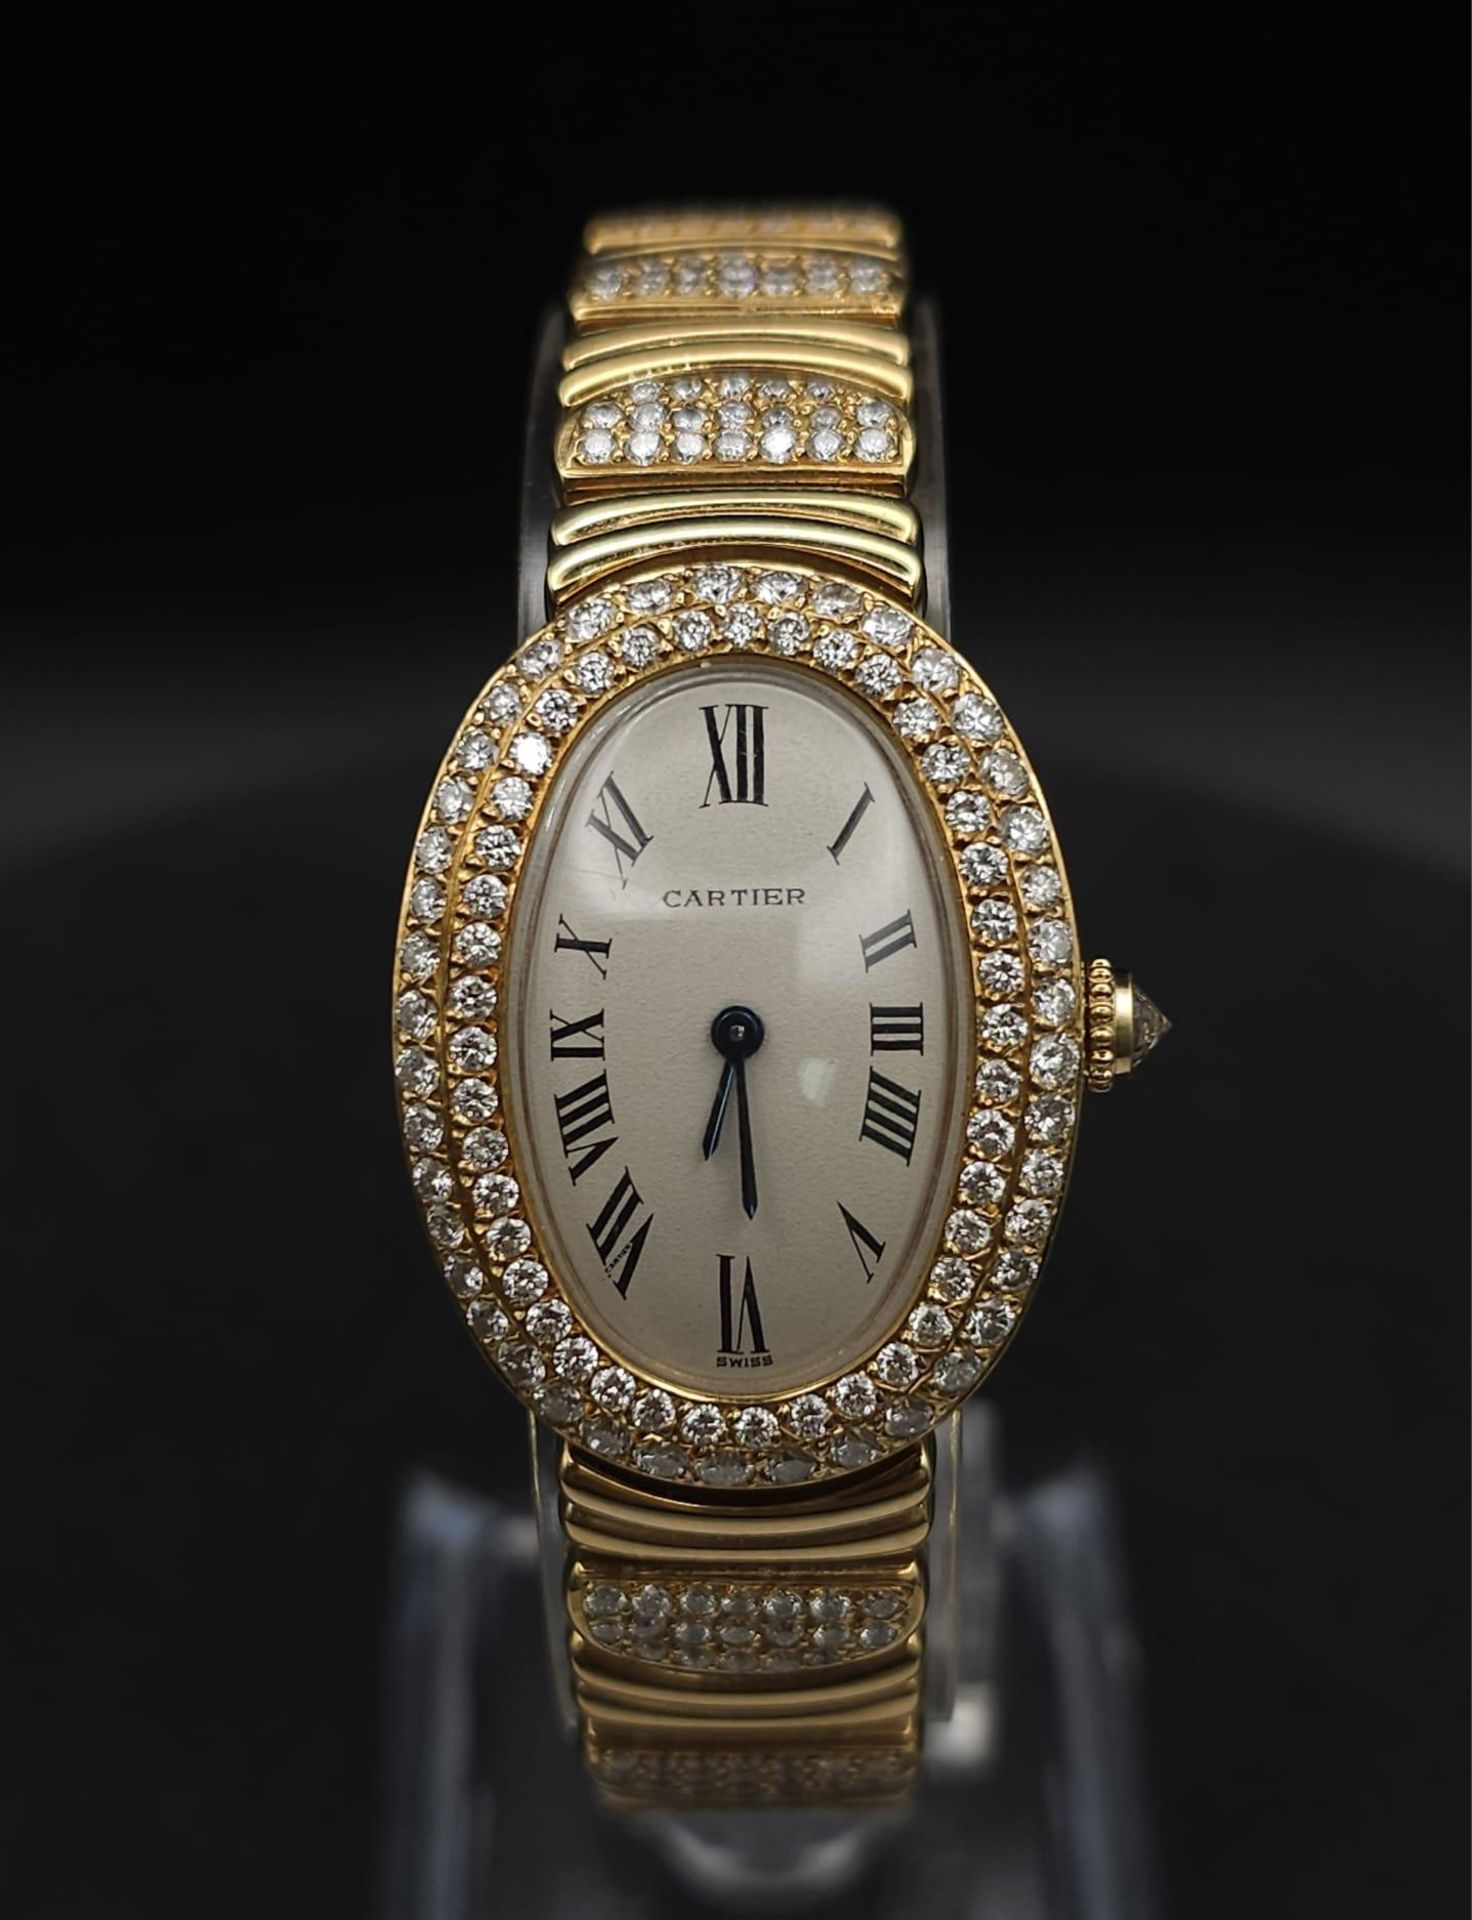 A Cartier Paris 18k Gold and Diamond Ladies Watch. 18k gold and diamond encrusted bracelet and